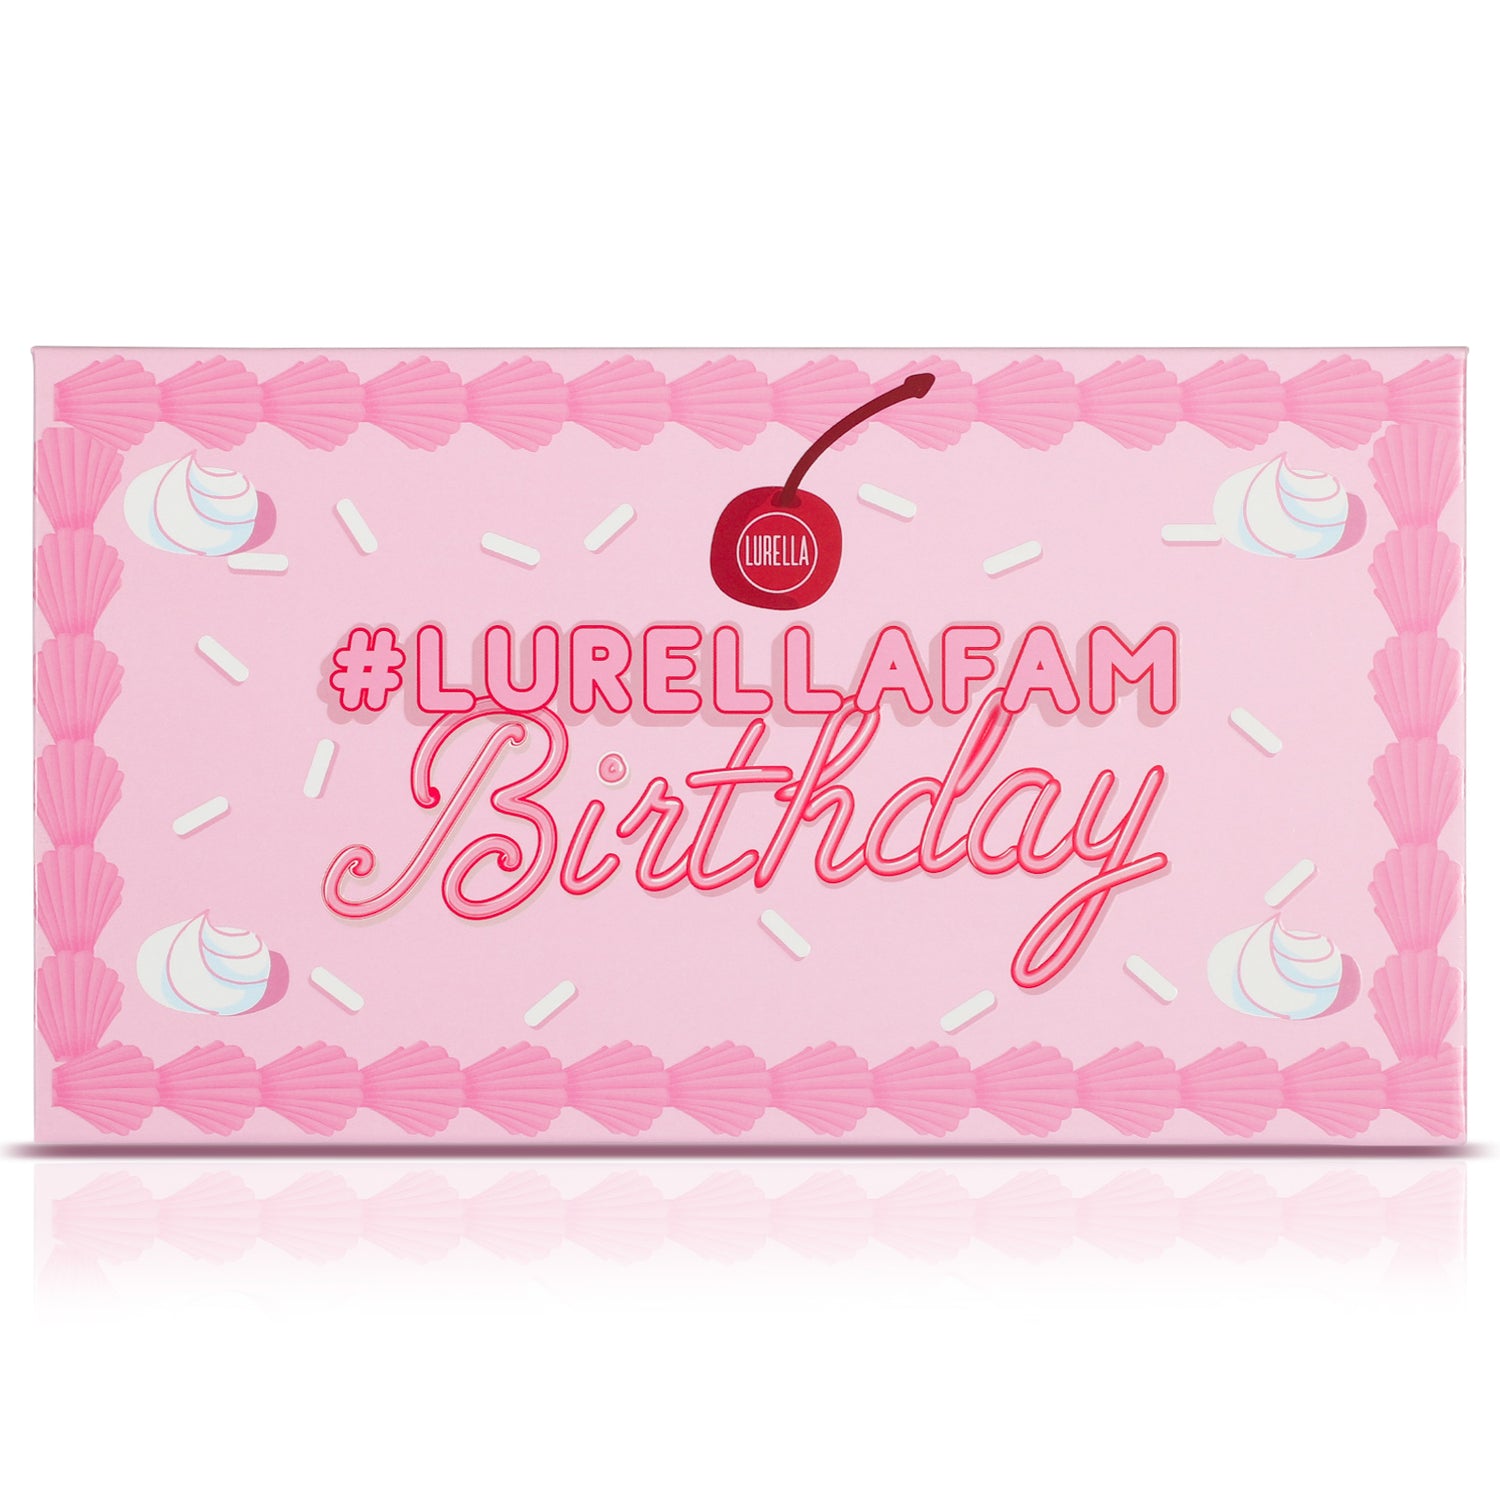 LurellaFam Birthday Bundle